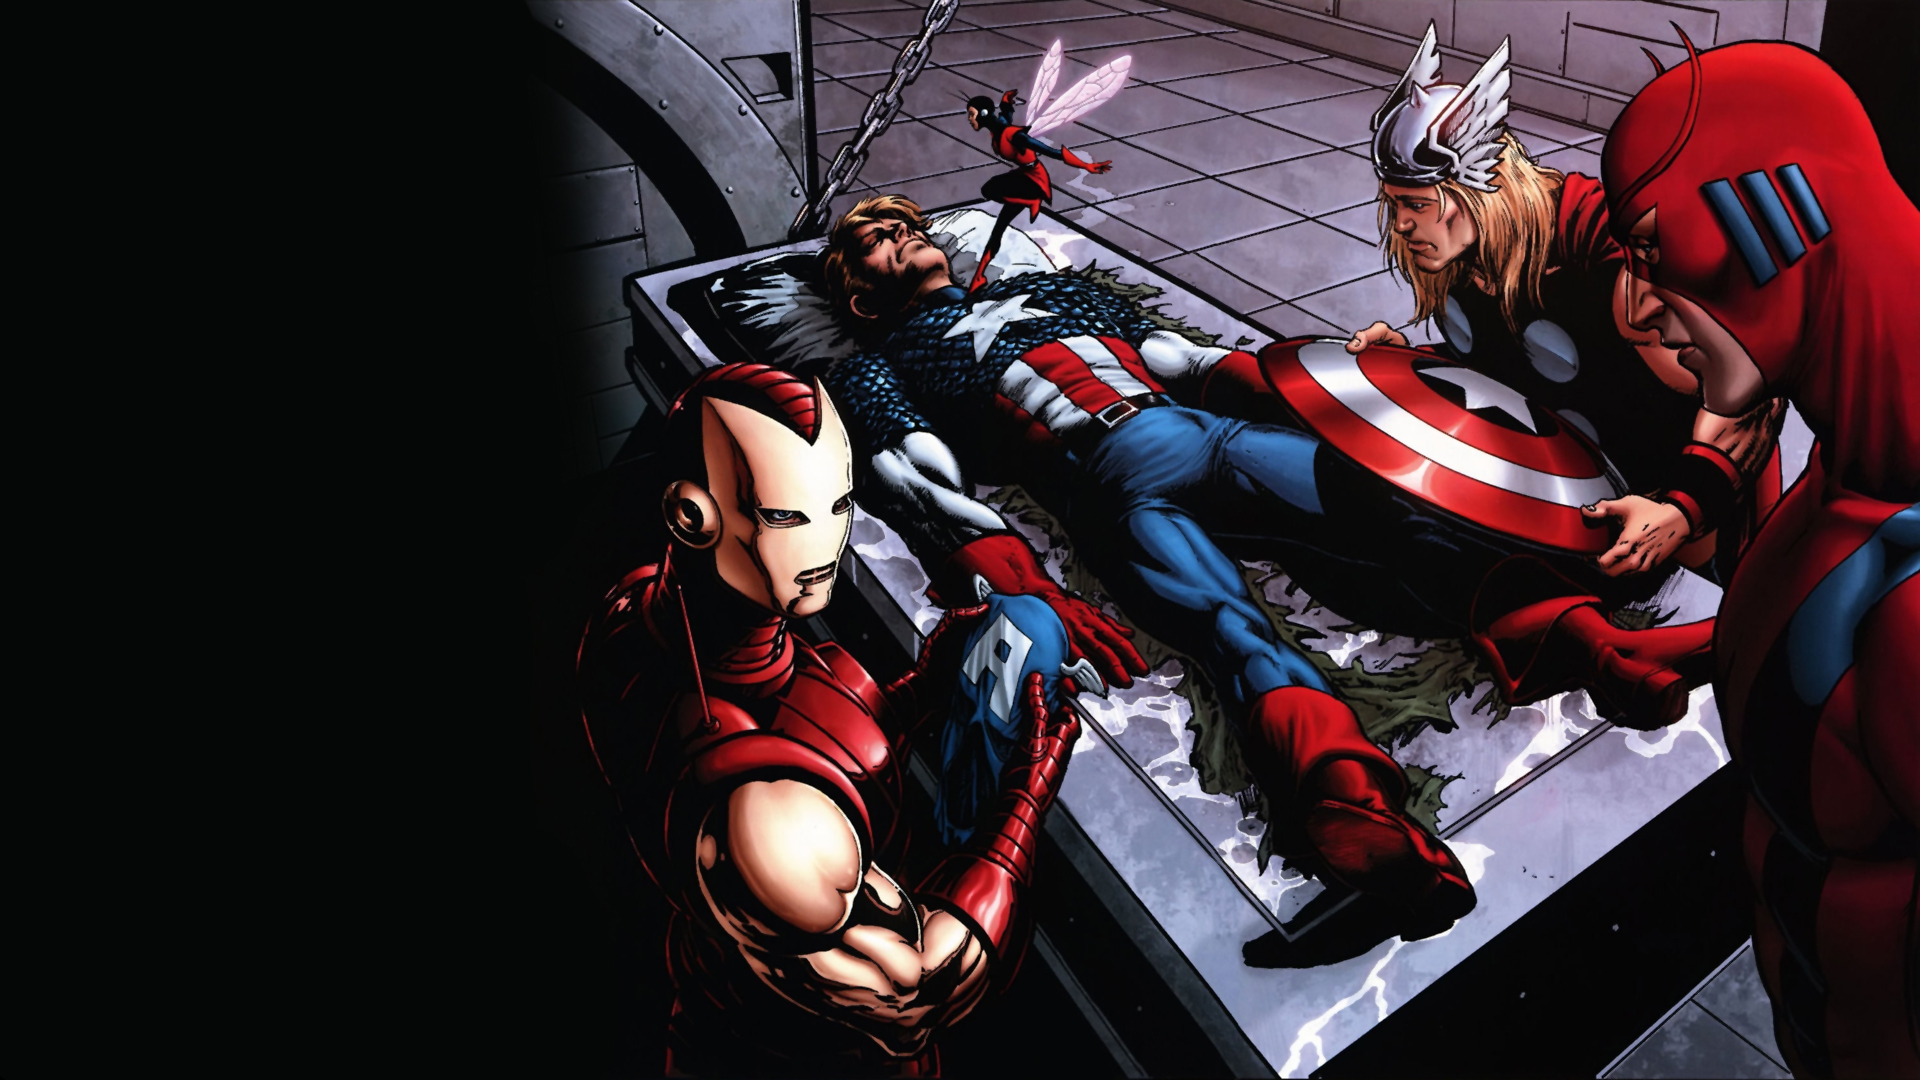 Скачать обои бесплатно Комиксы, Железный Человек, Капитан Америка, Тор, Комиксы Марвел картинка на рабочий стол ПК